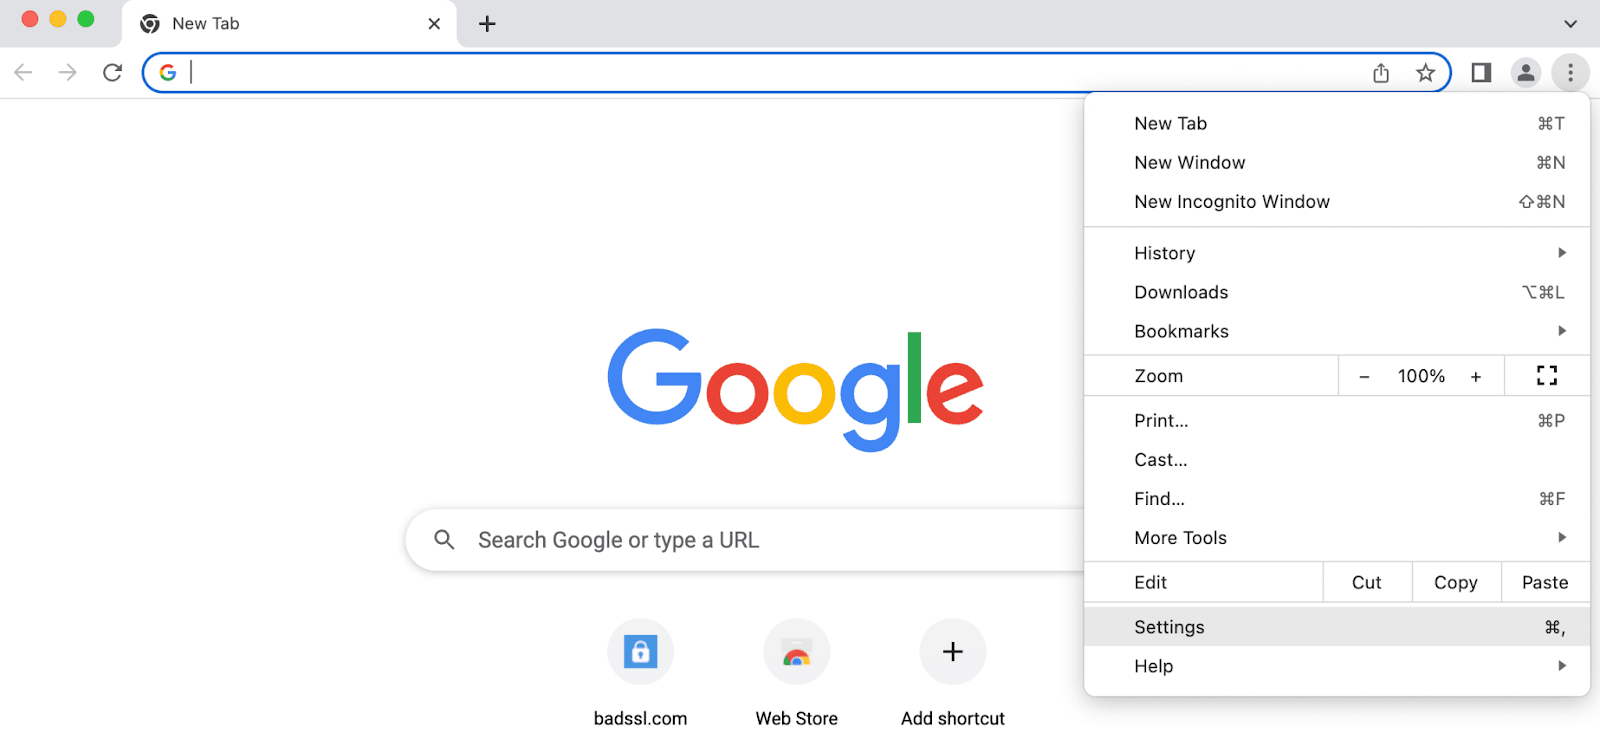 Impostazioni di Google Chrome